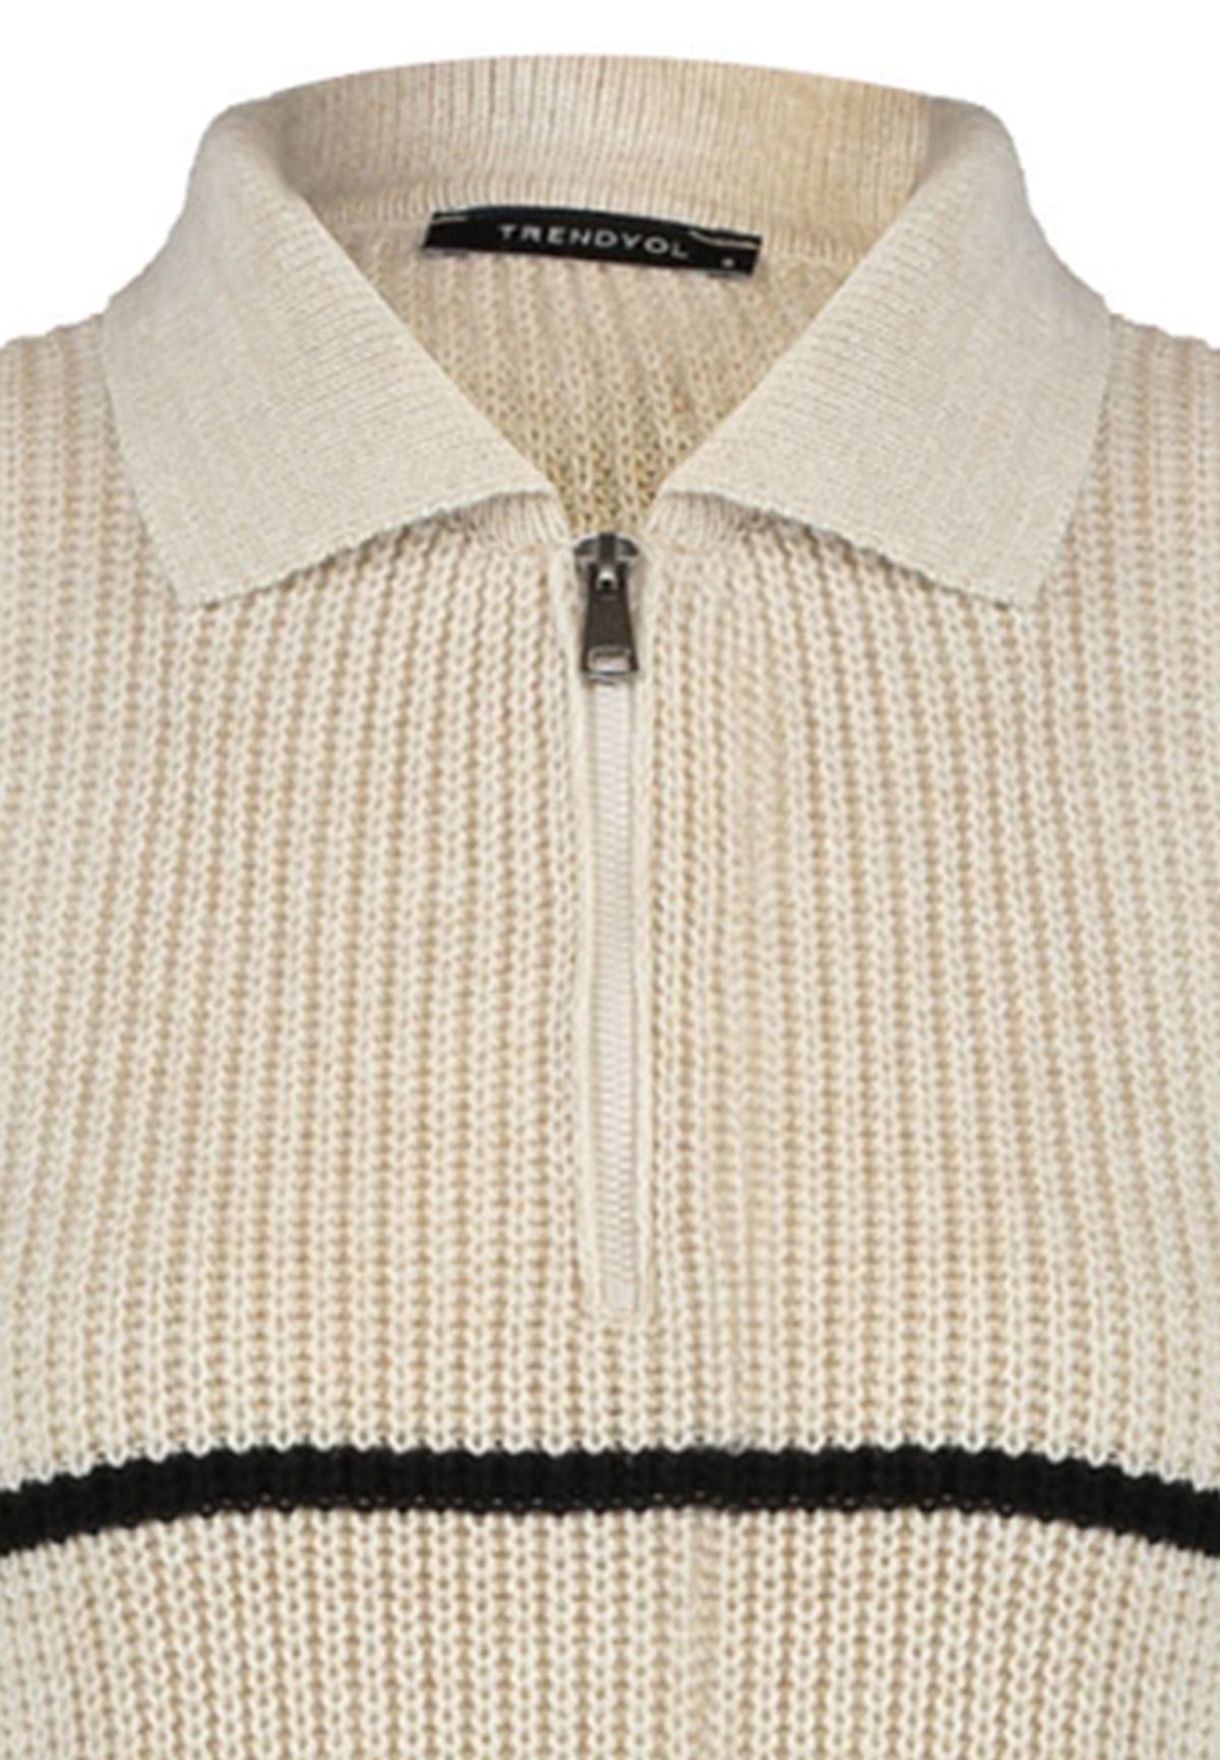 Polo Neck Striped Sweater